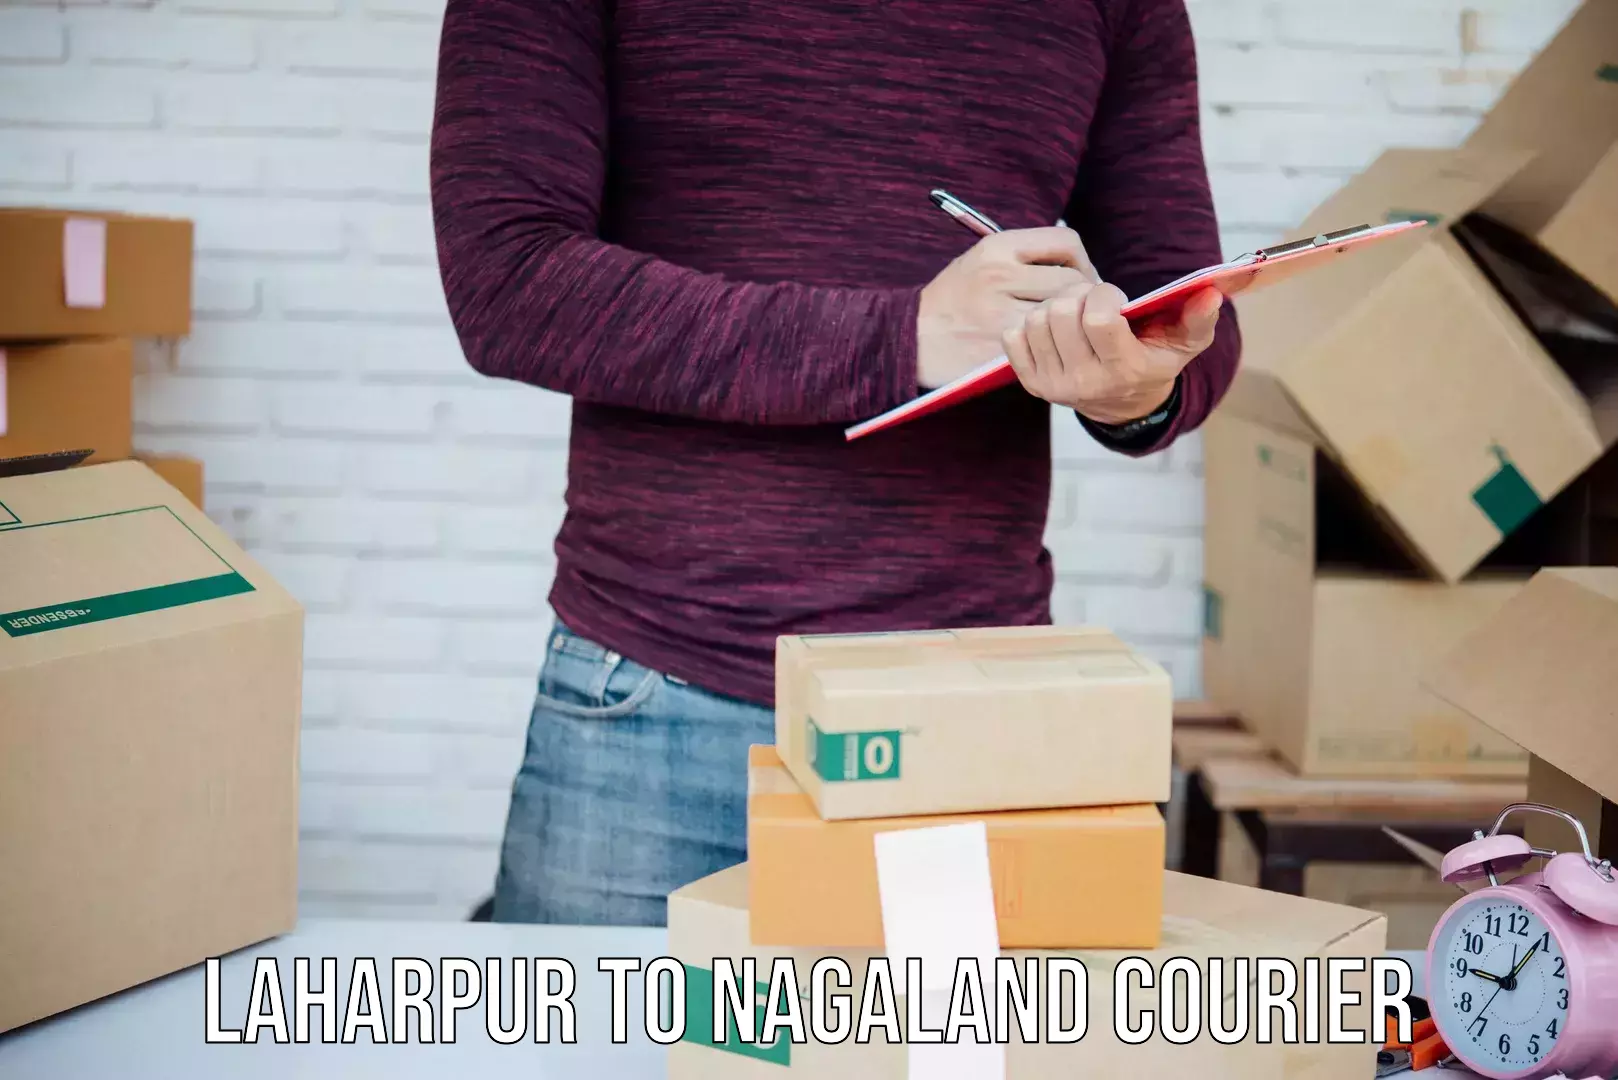 Speedy delivery service Laharpur to Mon